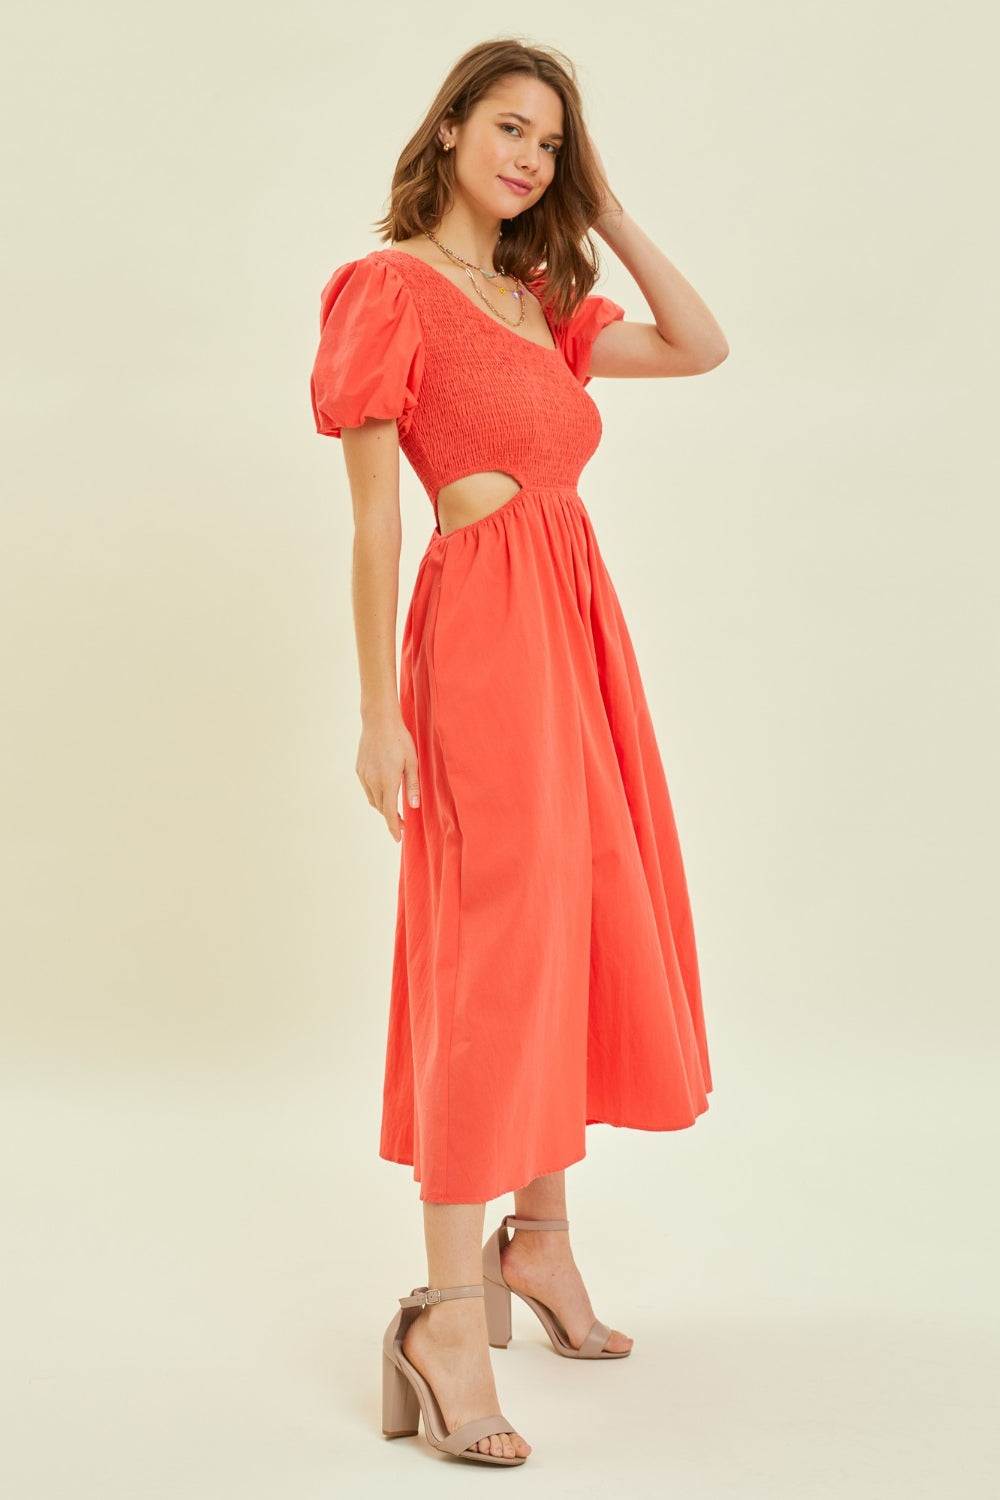 TEEK - Cherry Red Smocked Cutout Dress DRESS TEEK Trend Cherry Red S 